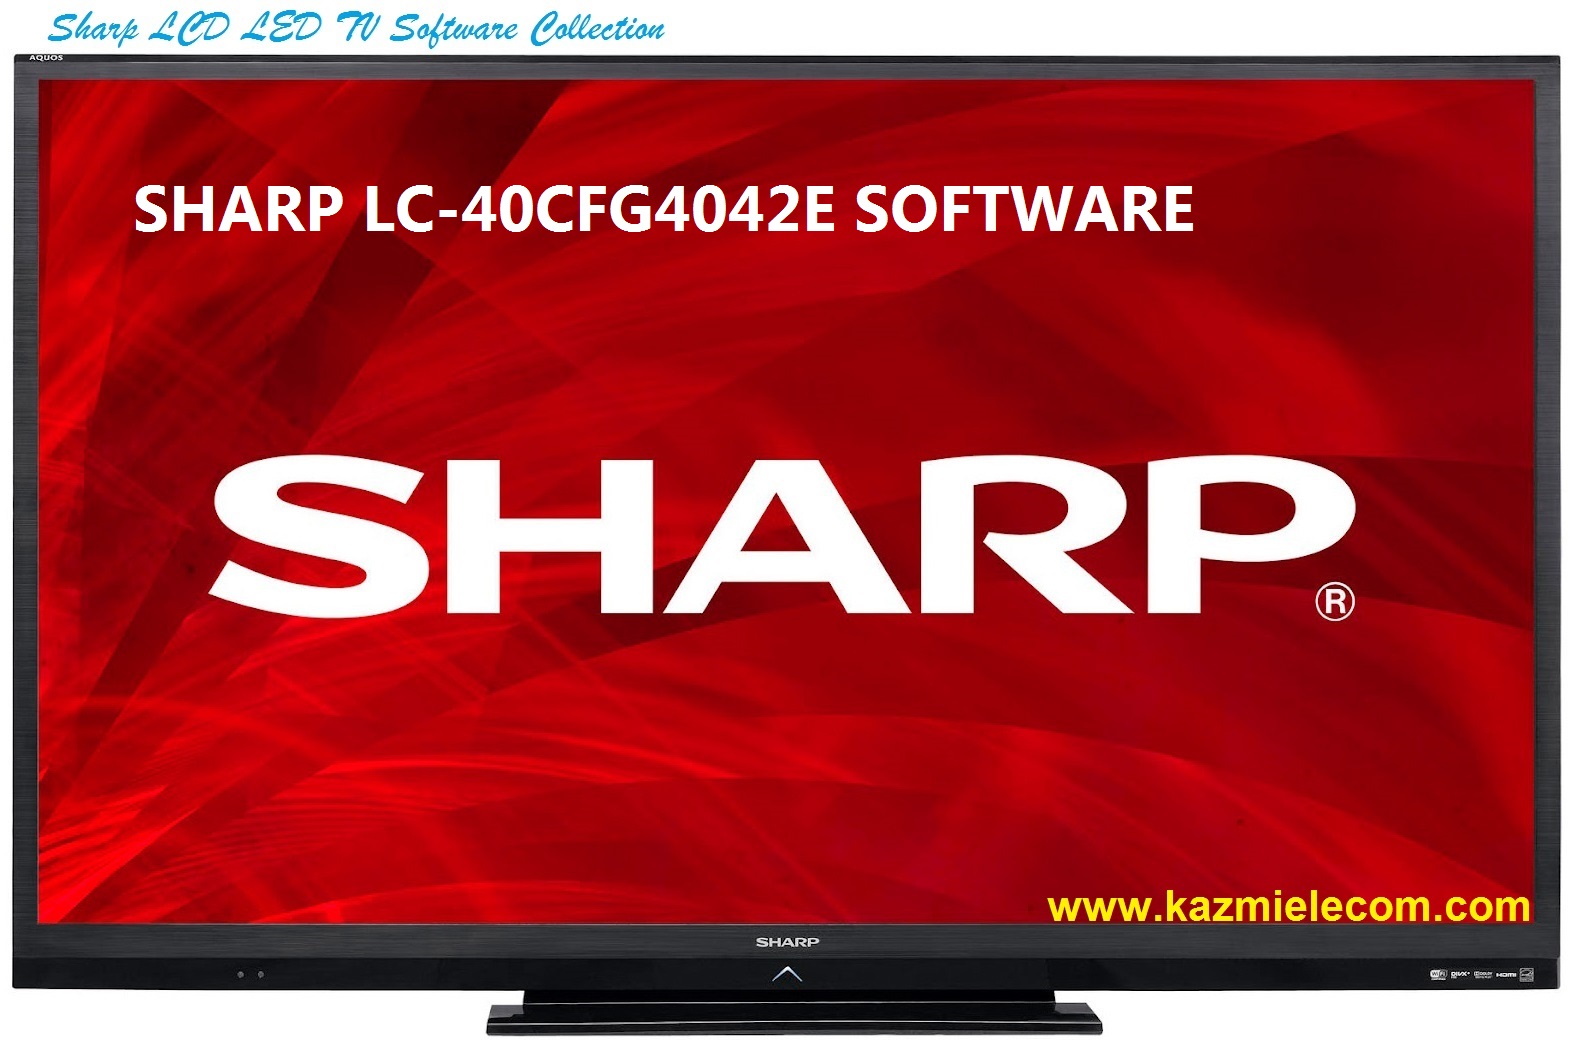 Sharp Lc-40Cfg4042E